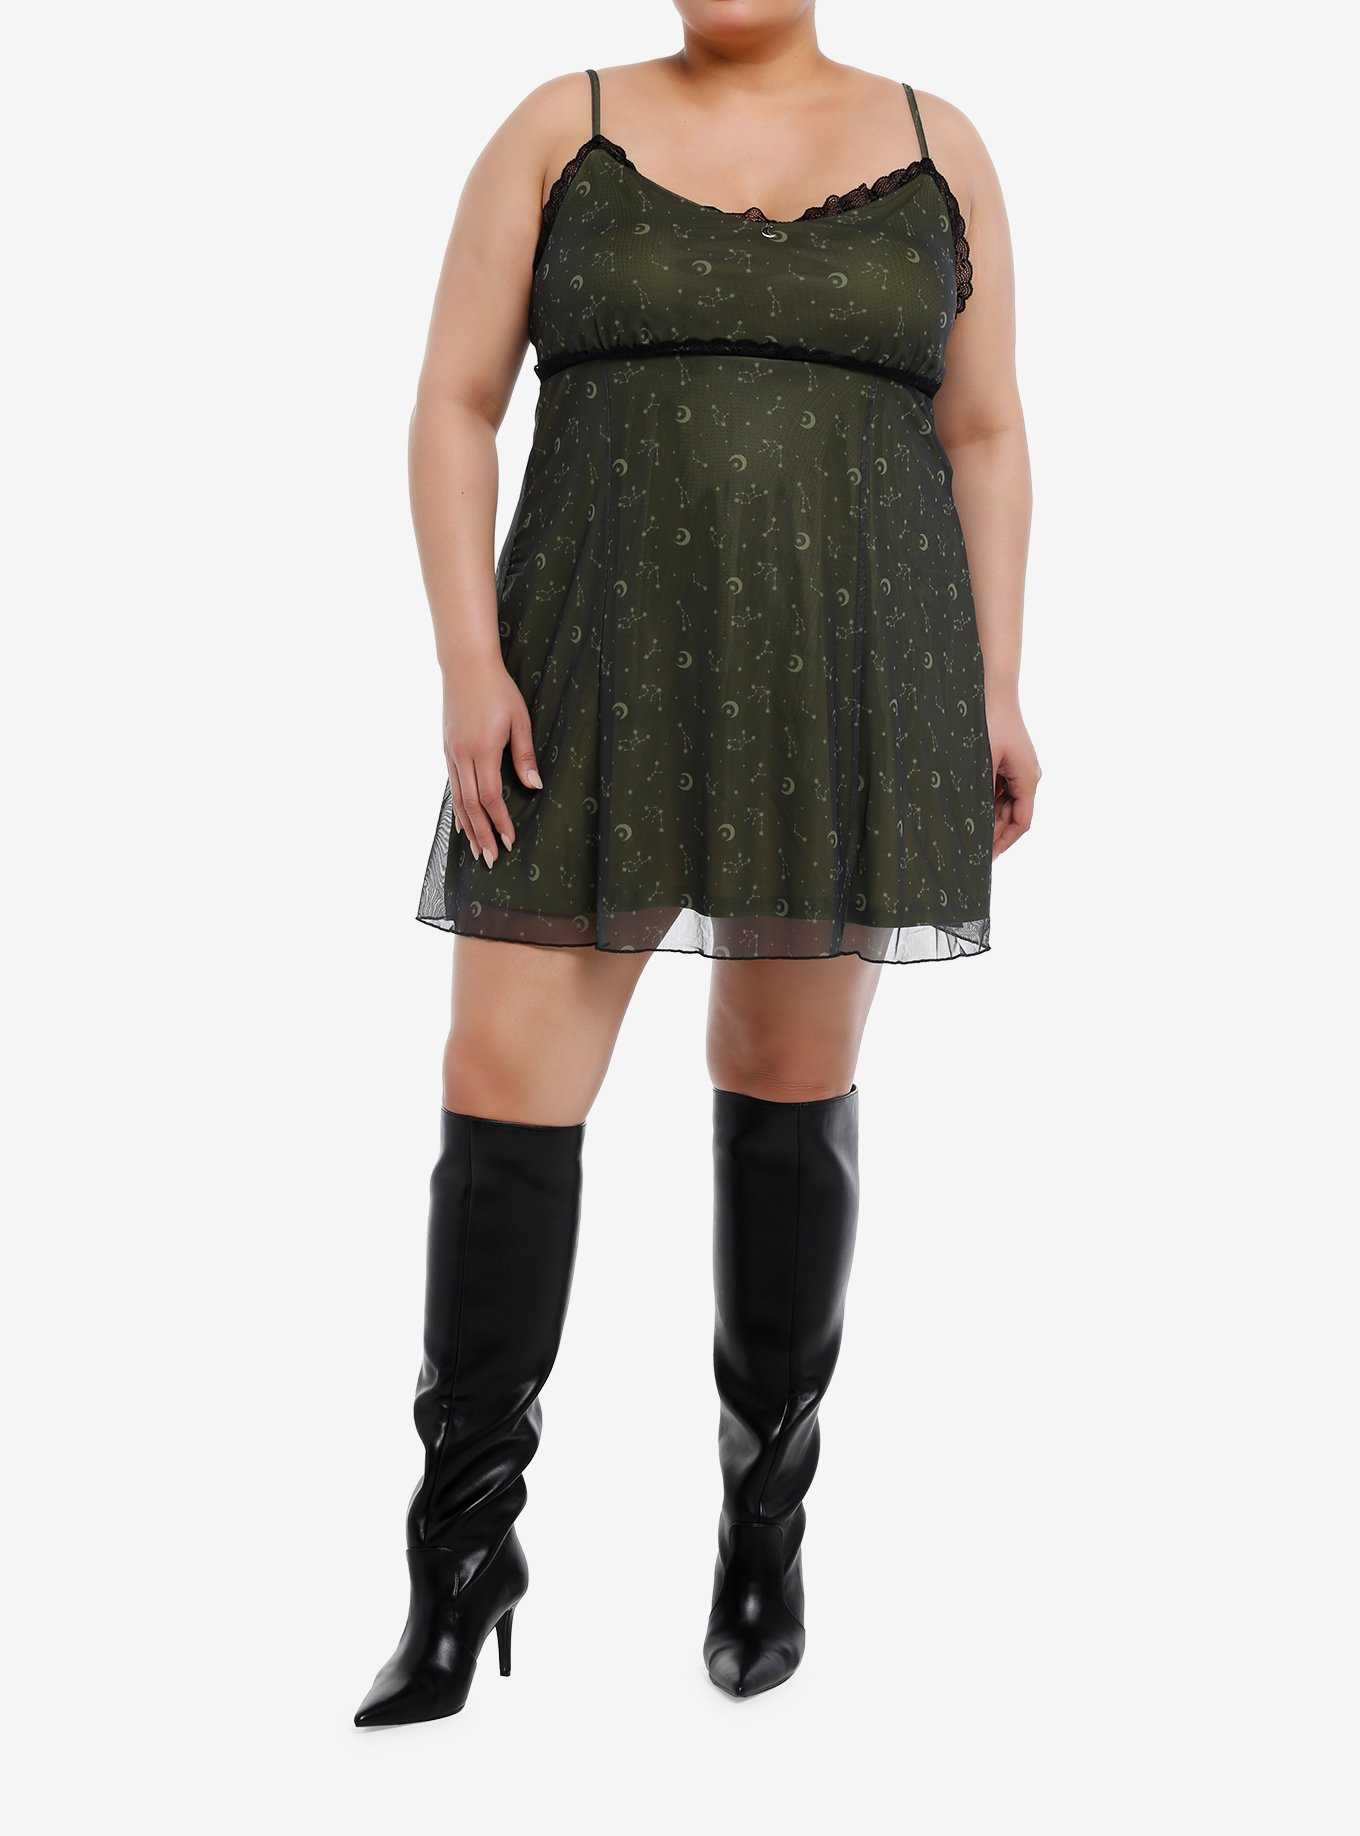 Cosmic Aura Constellation Black Lace Mini Dress Plus Size, , hi-res